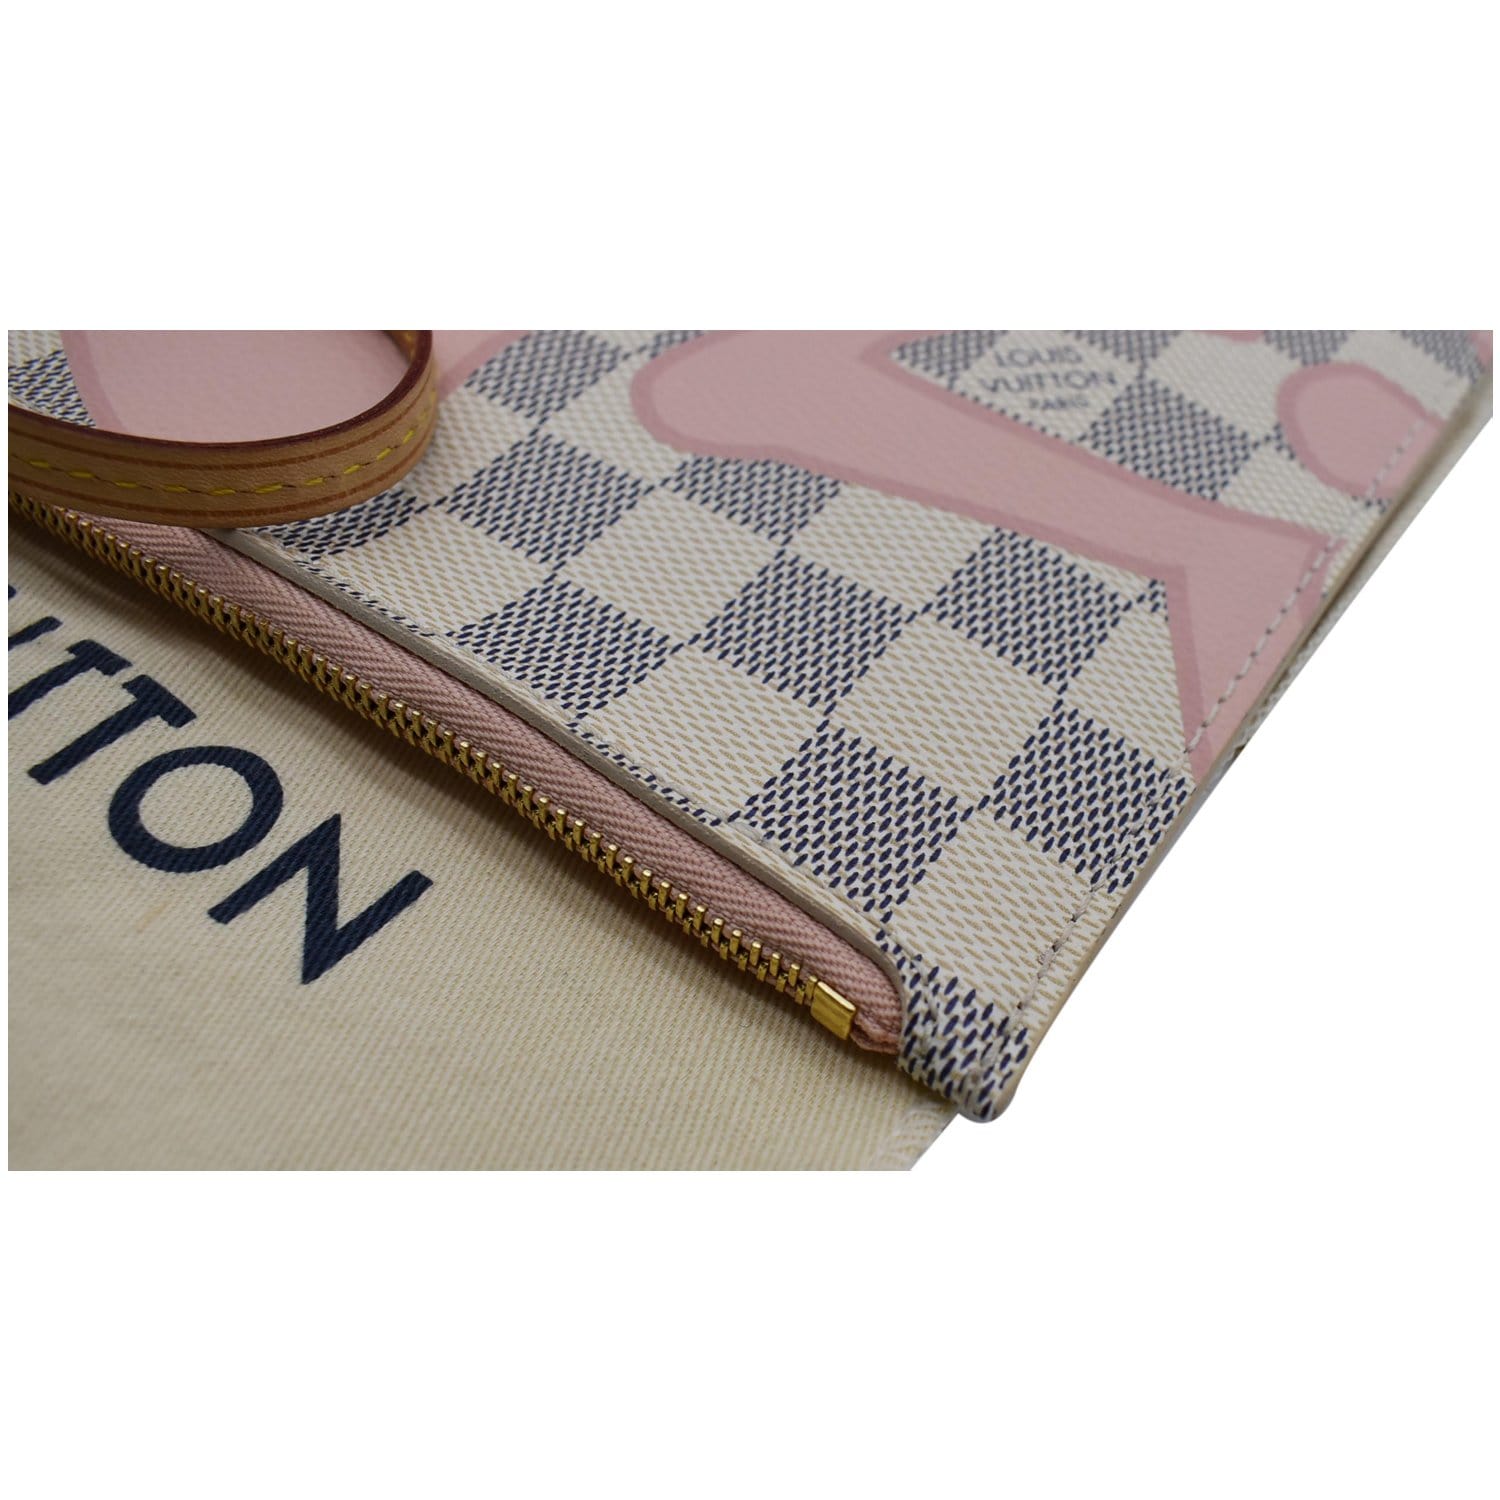 Louis Vuitton Pochette Wristlet Damier Azur Cream – Now You Glow